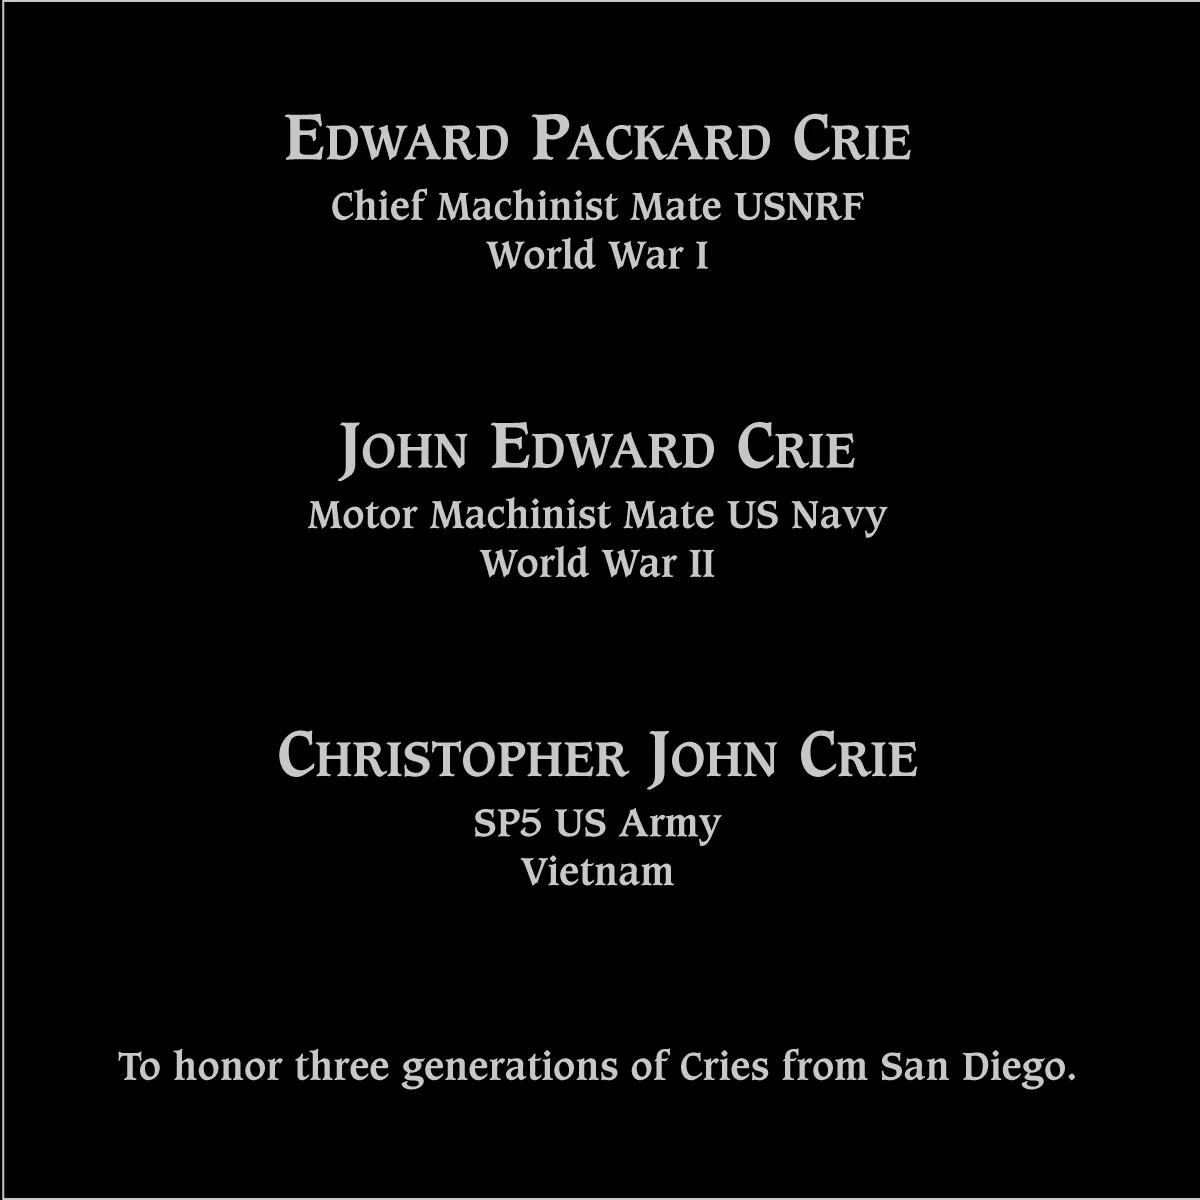 Edward Packard Crie